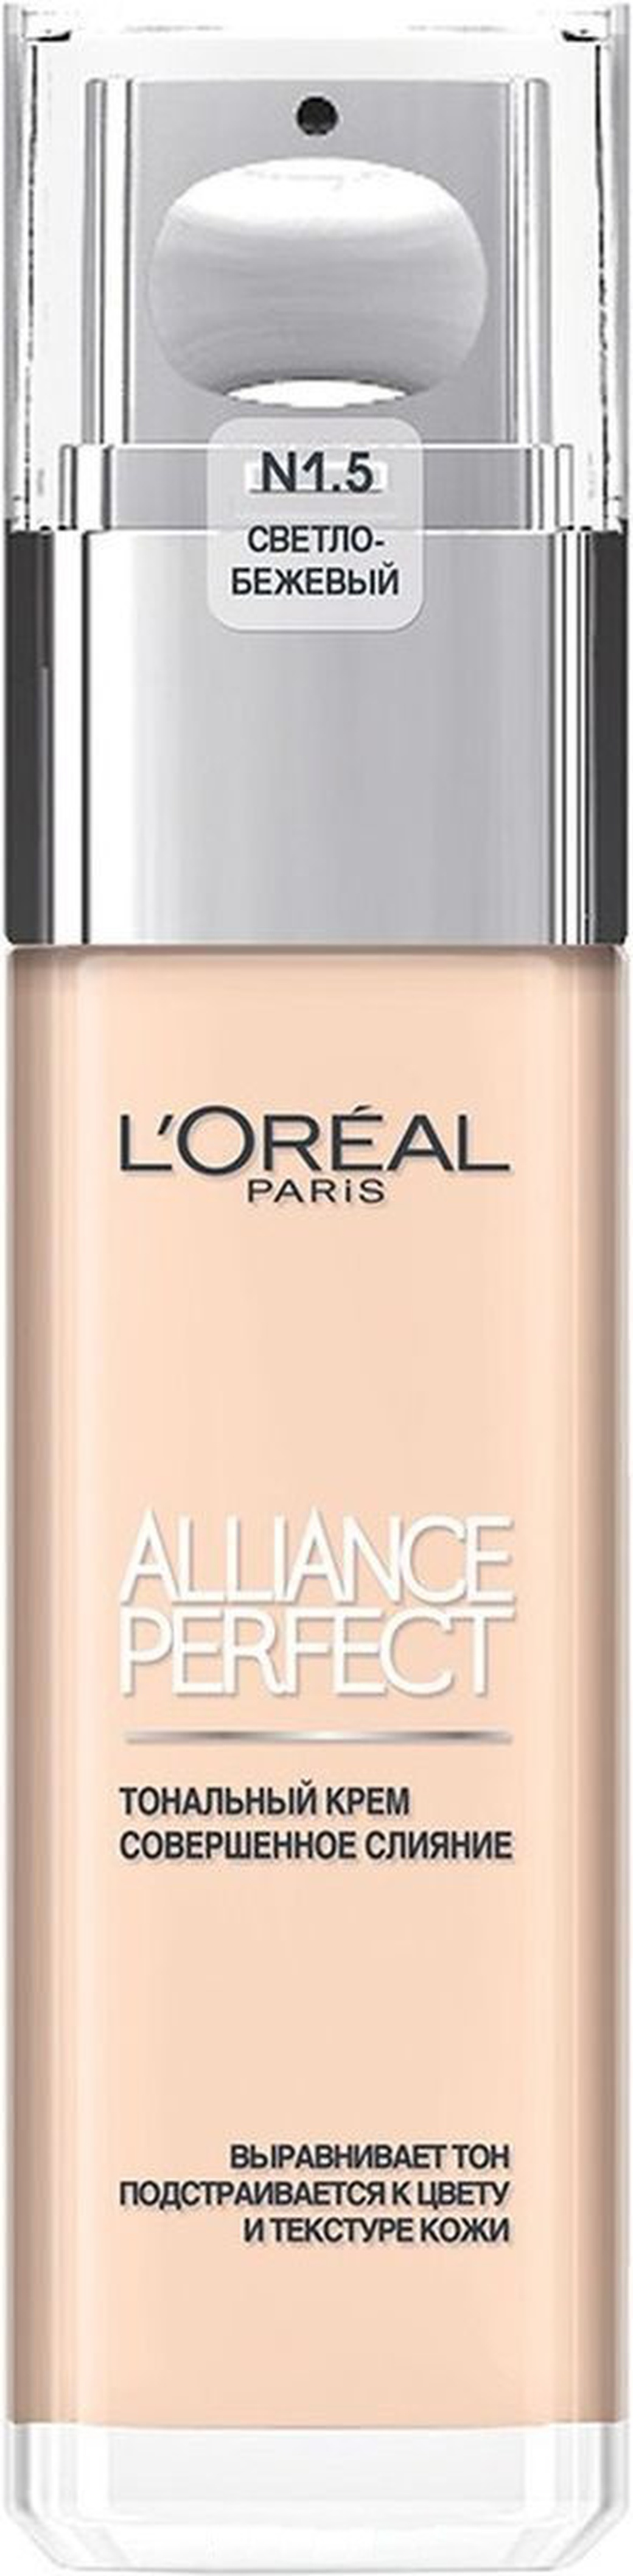 L'Oreal Alliance Perfect Тональный крем тон N1.5 Linen фото